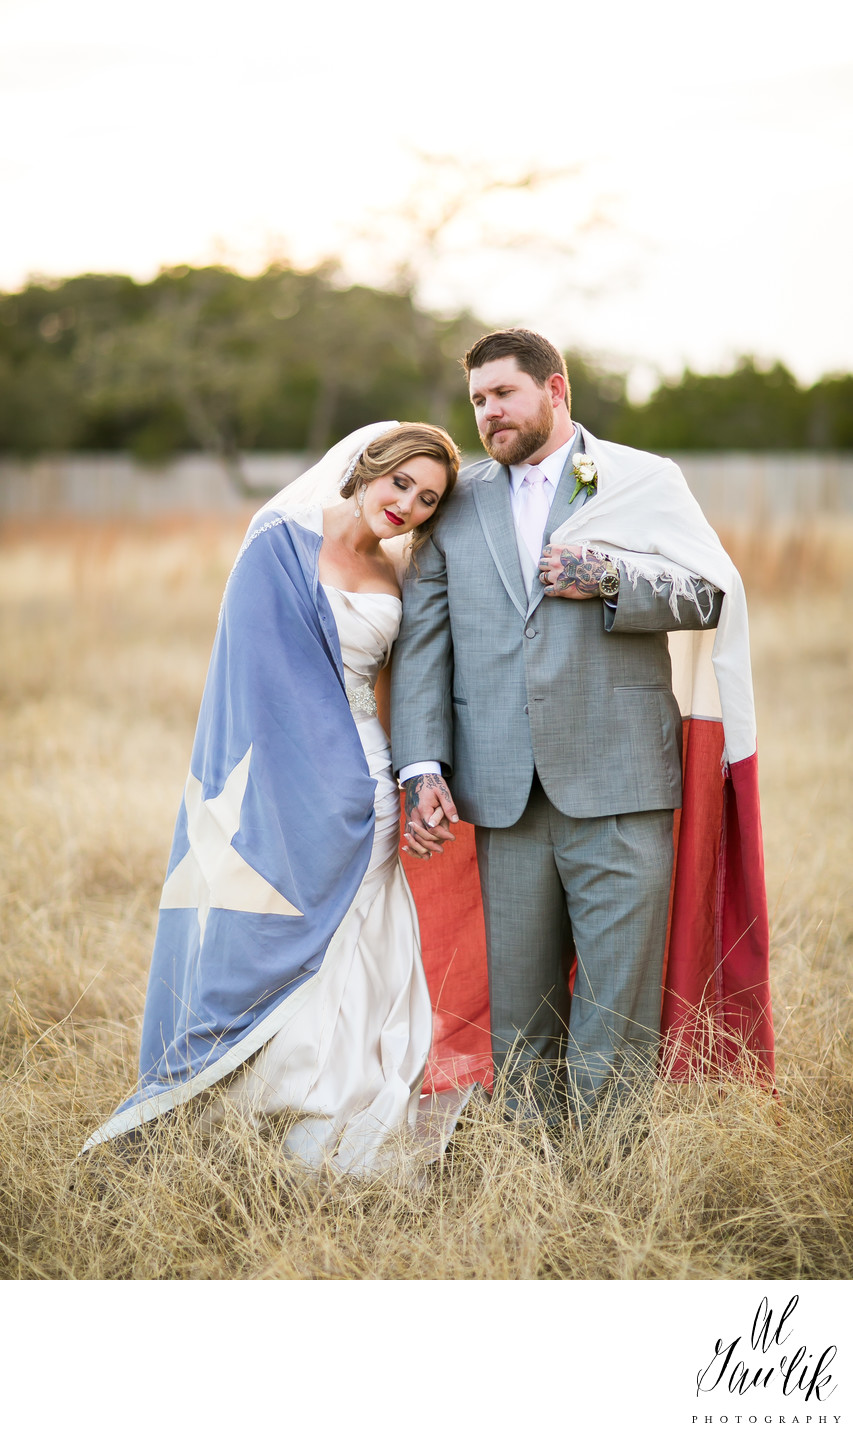 Best Texas Wedding Photography